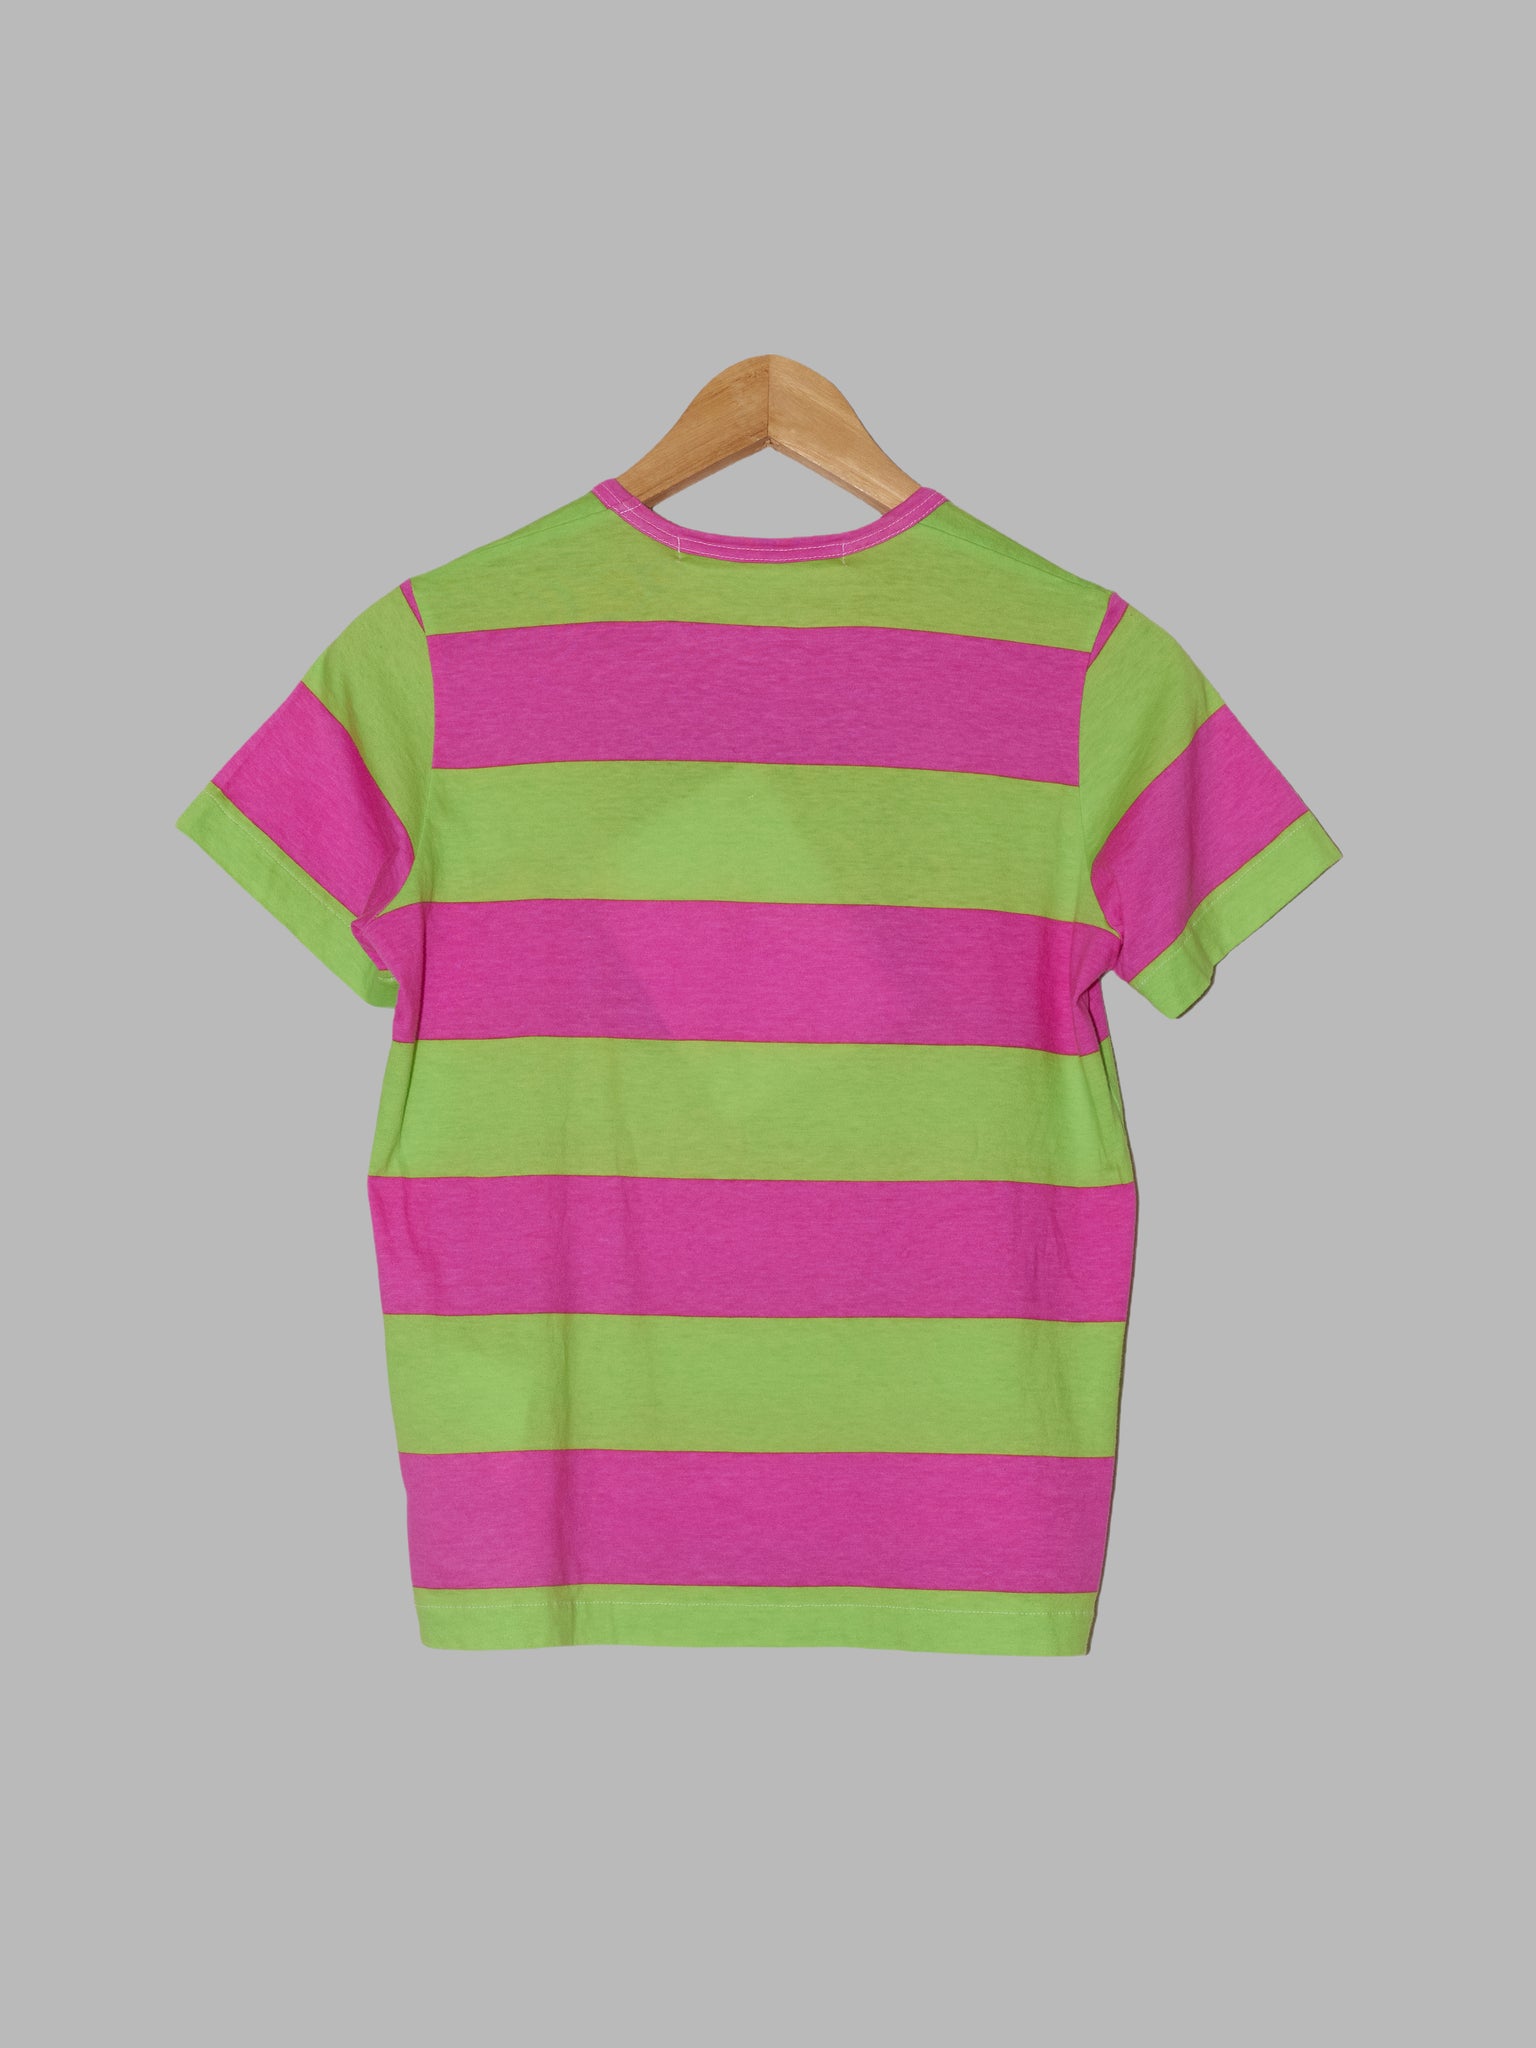 Junya Watanabe Comme des Garcons SS2001 pink green stripe square print t-shirt